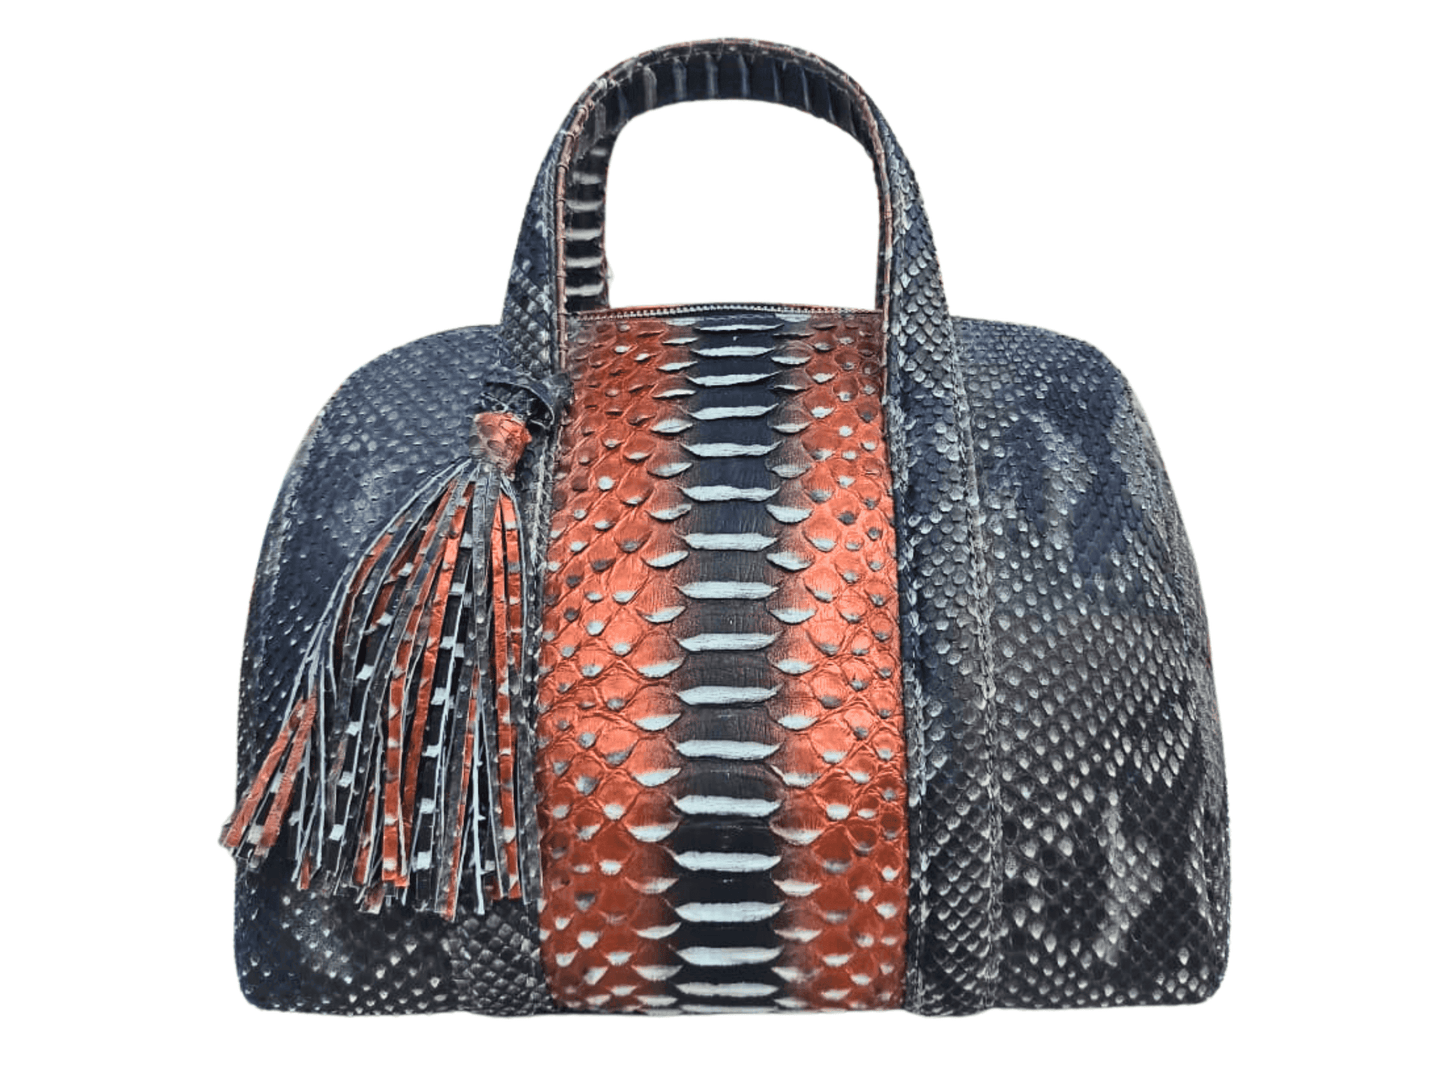 Snakeskin Bowler Bag Terra Cotta Python Jacket by LFM Fashion